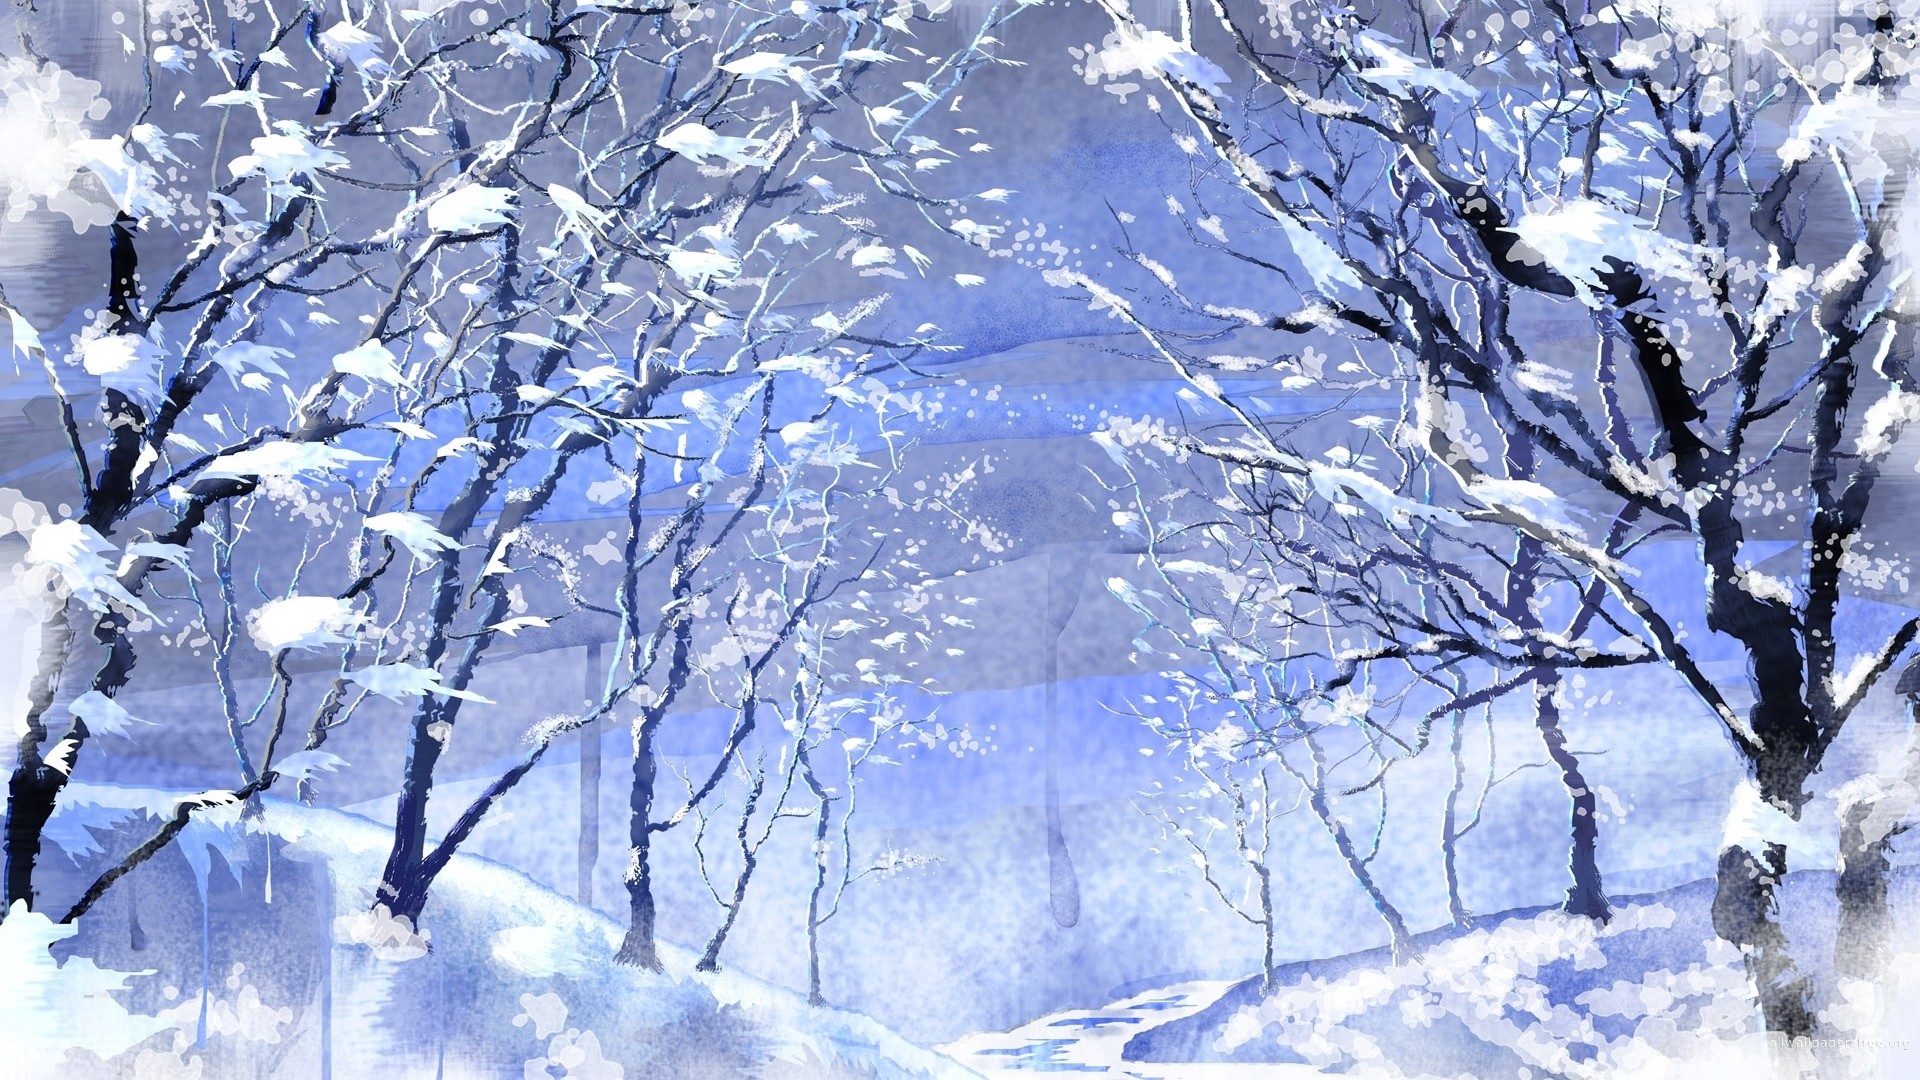 Christmas Winter Background Image